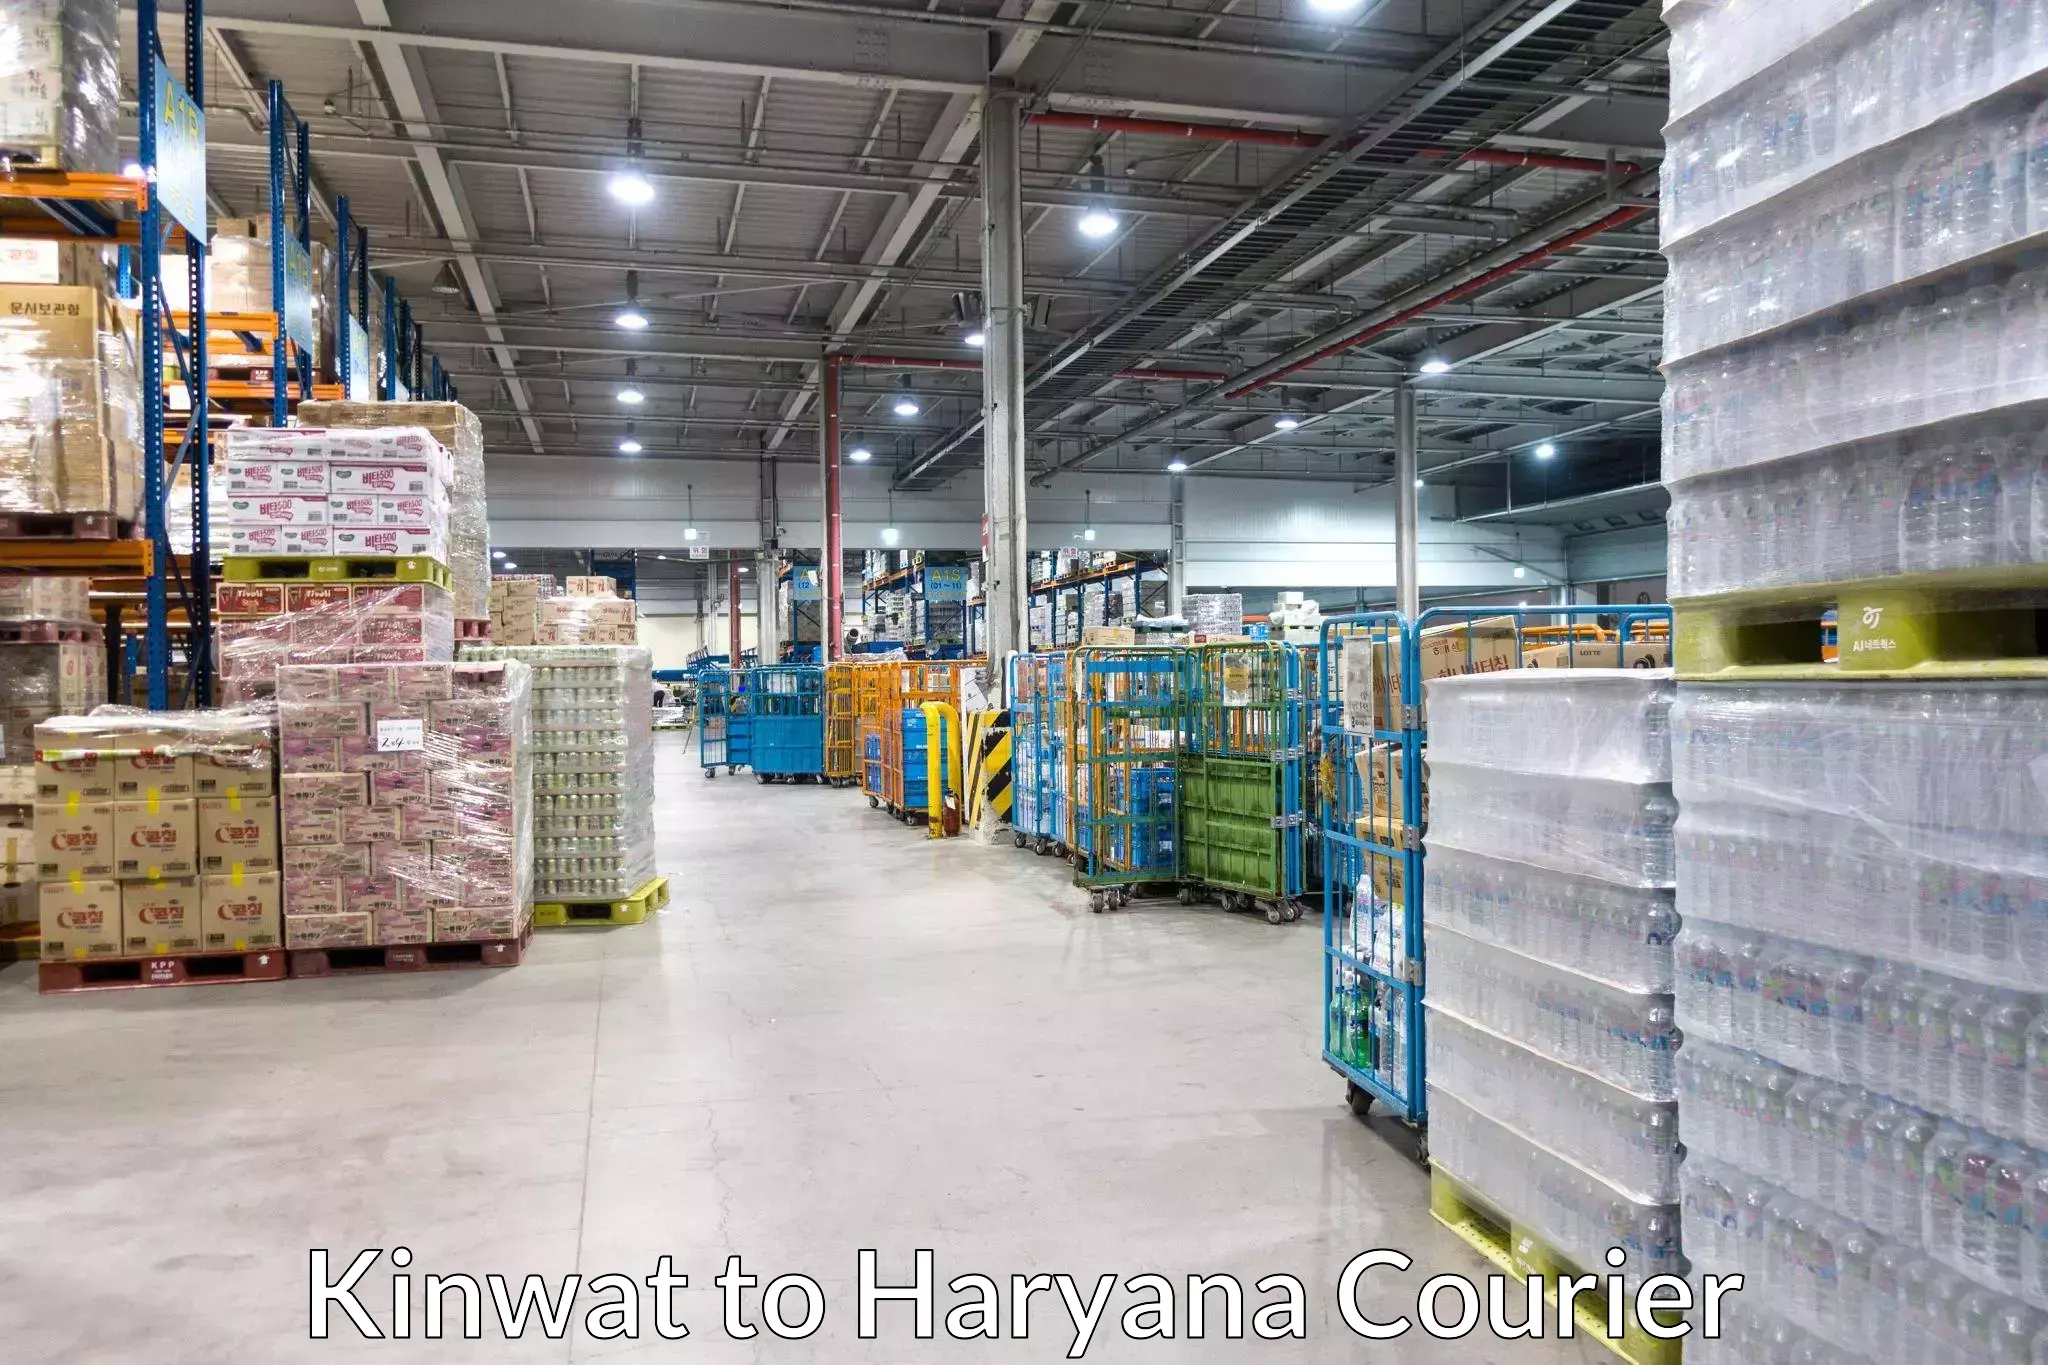 Logistics management Kinwat to Narwana